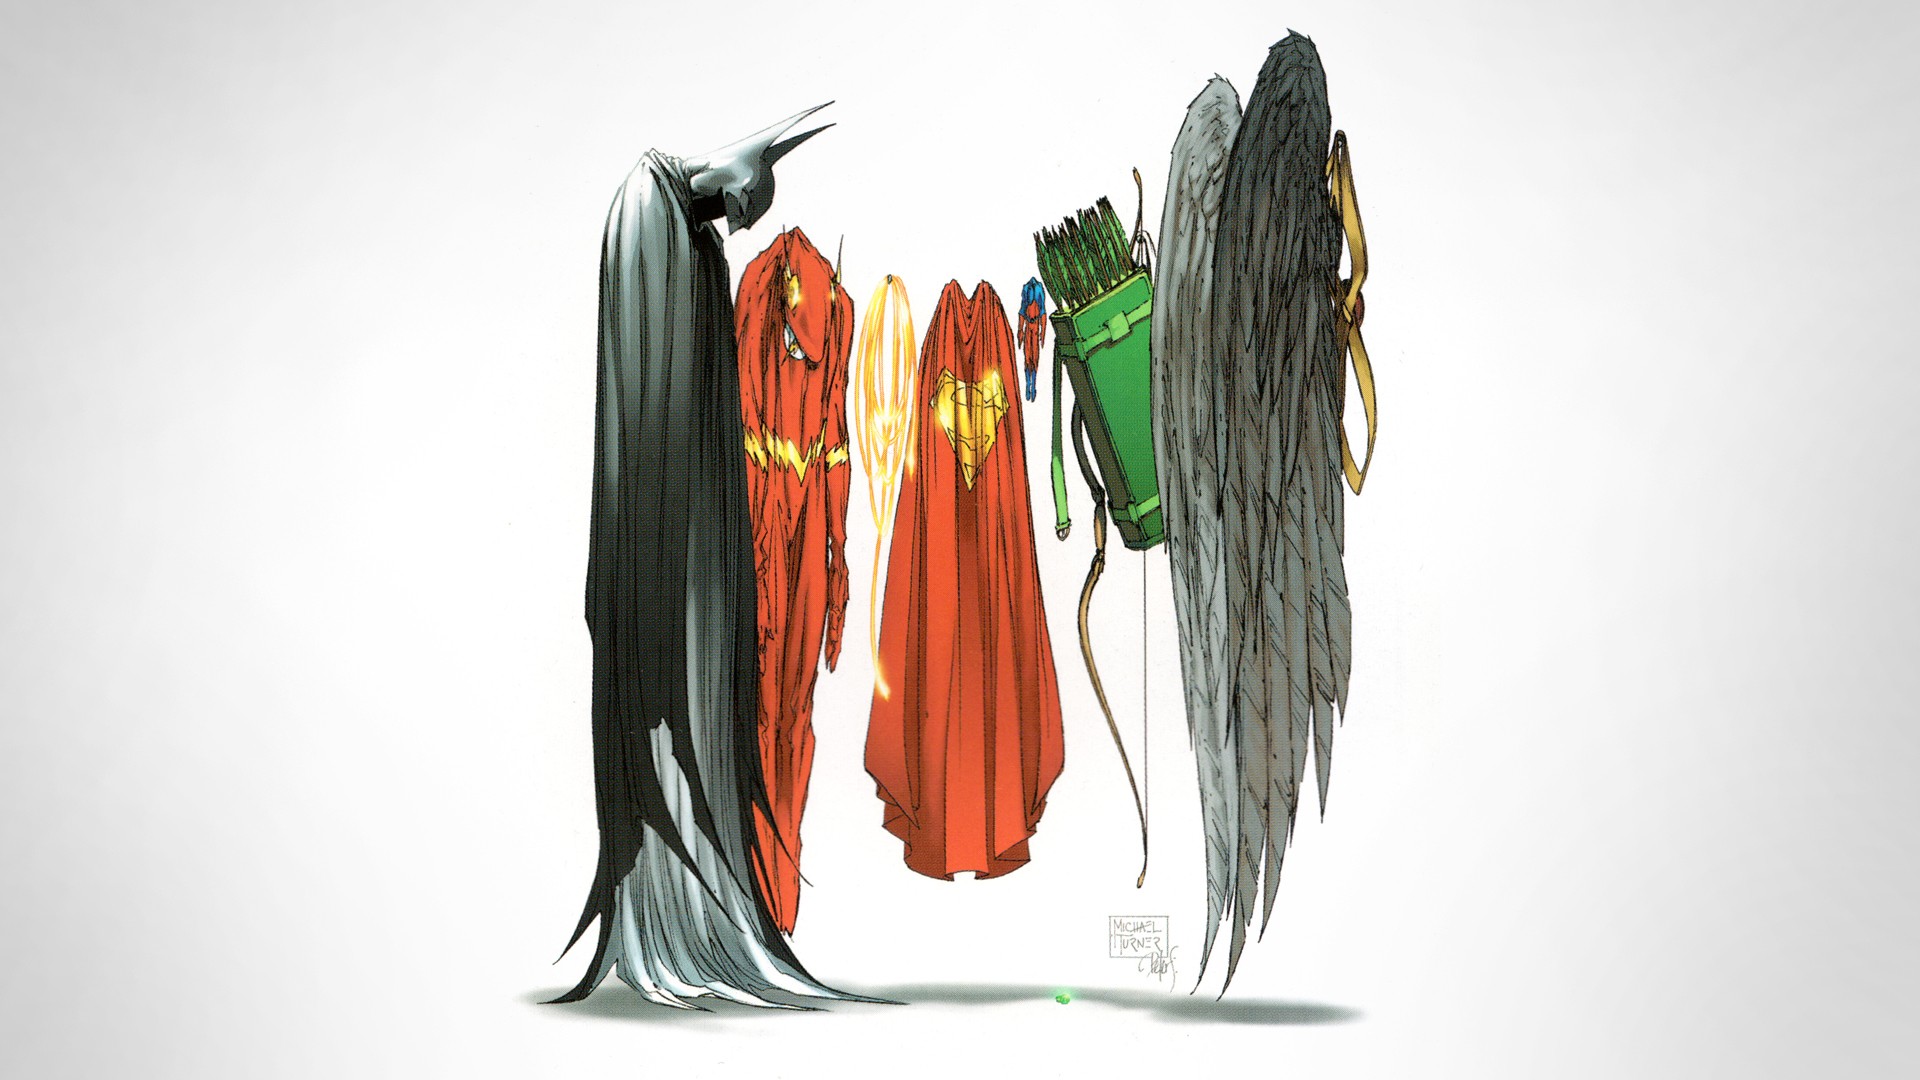  flash Justice League Green Arrow arrows Hawkman Wonder Woman